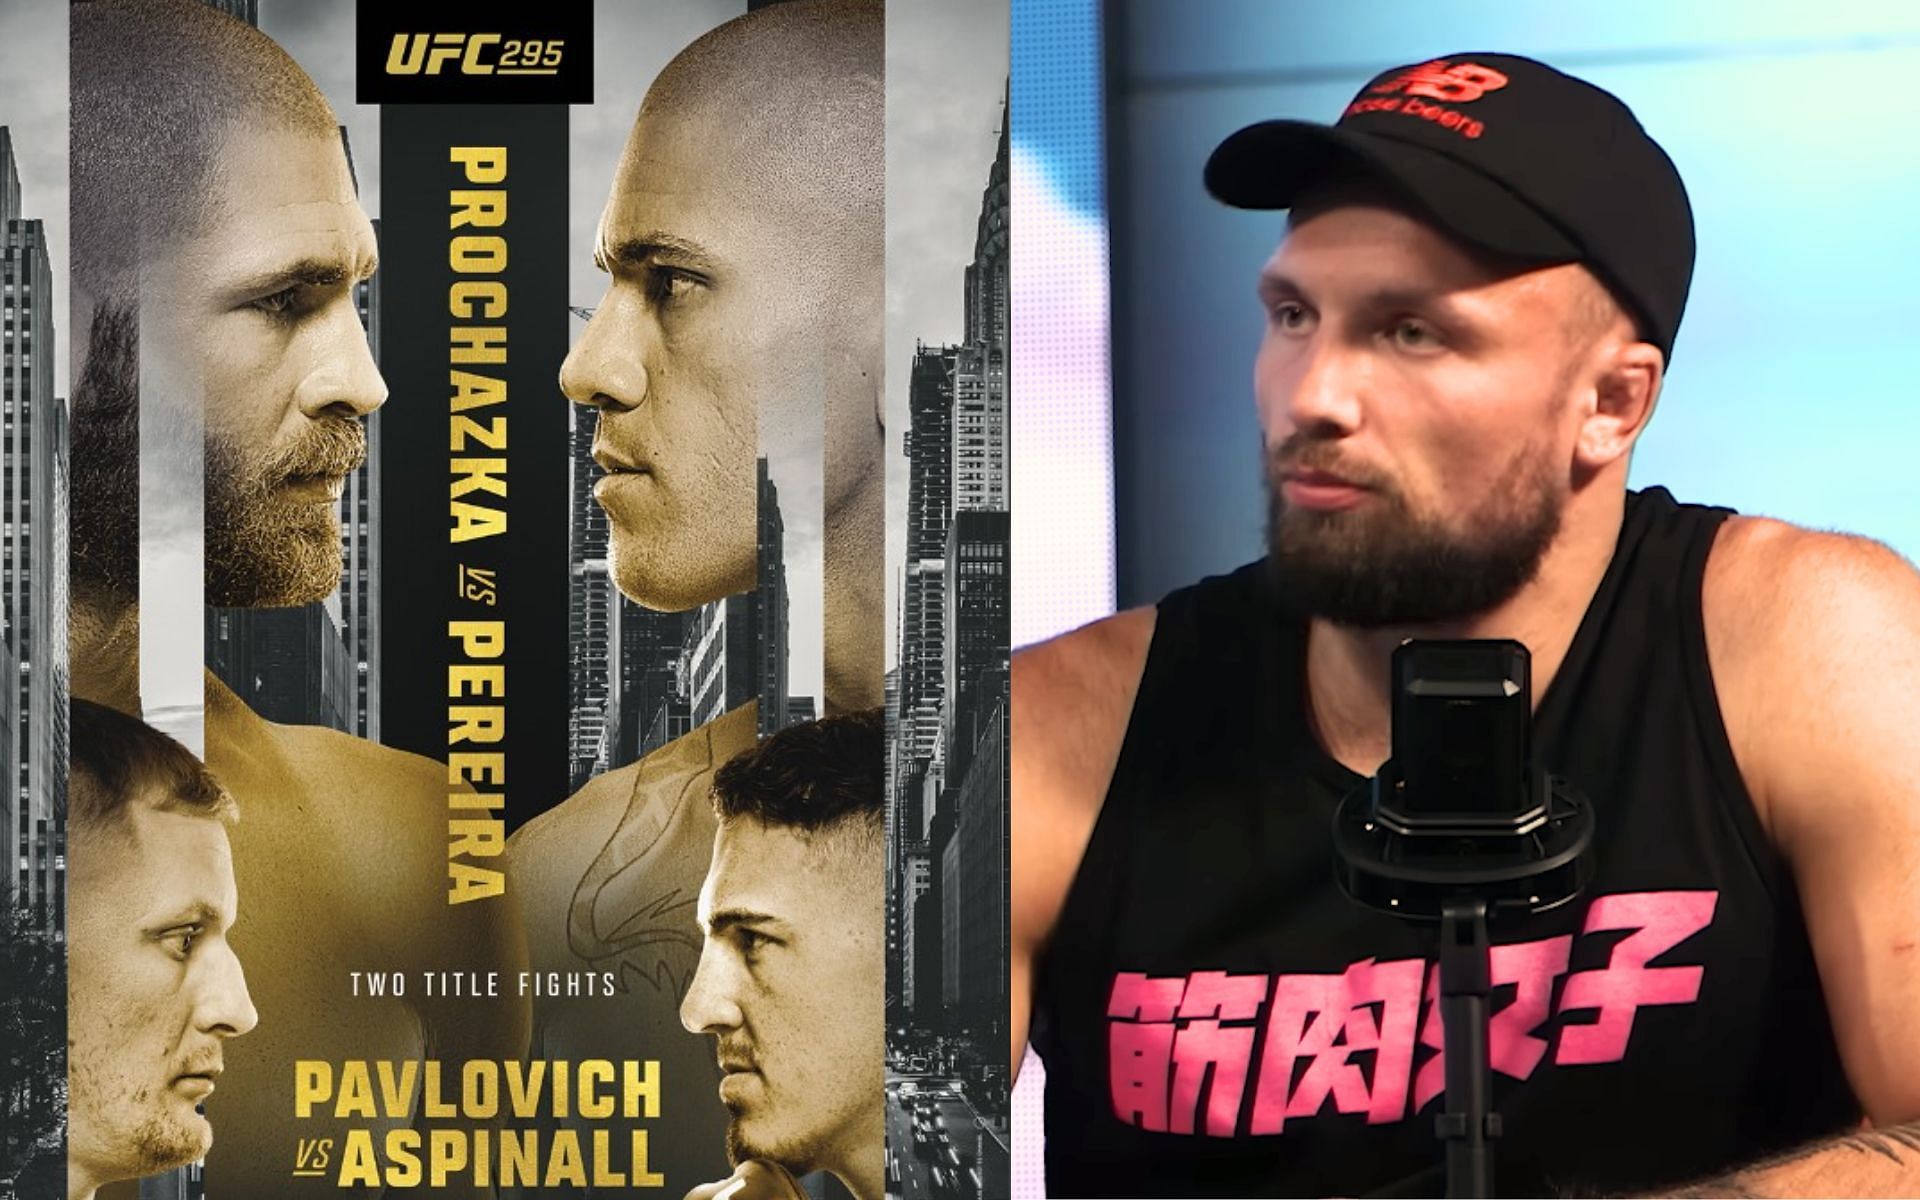 UFC 295 poster (left) and Craig Jones (right0 [Images Courtesy: @b-teamjiujitsu on YouTube and @ufc on Instagram]